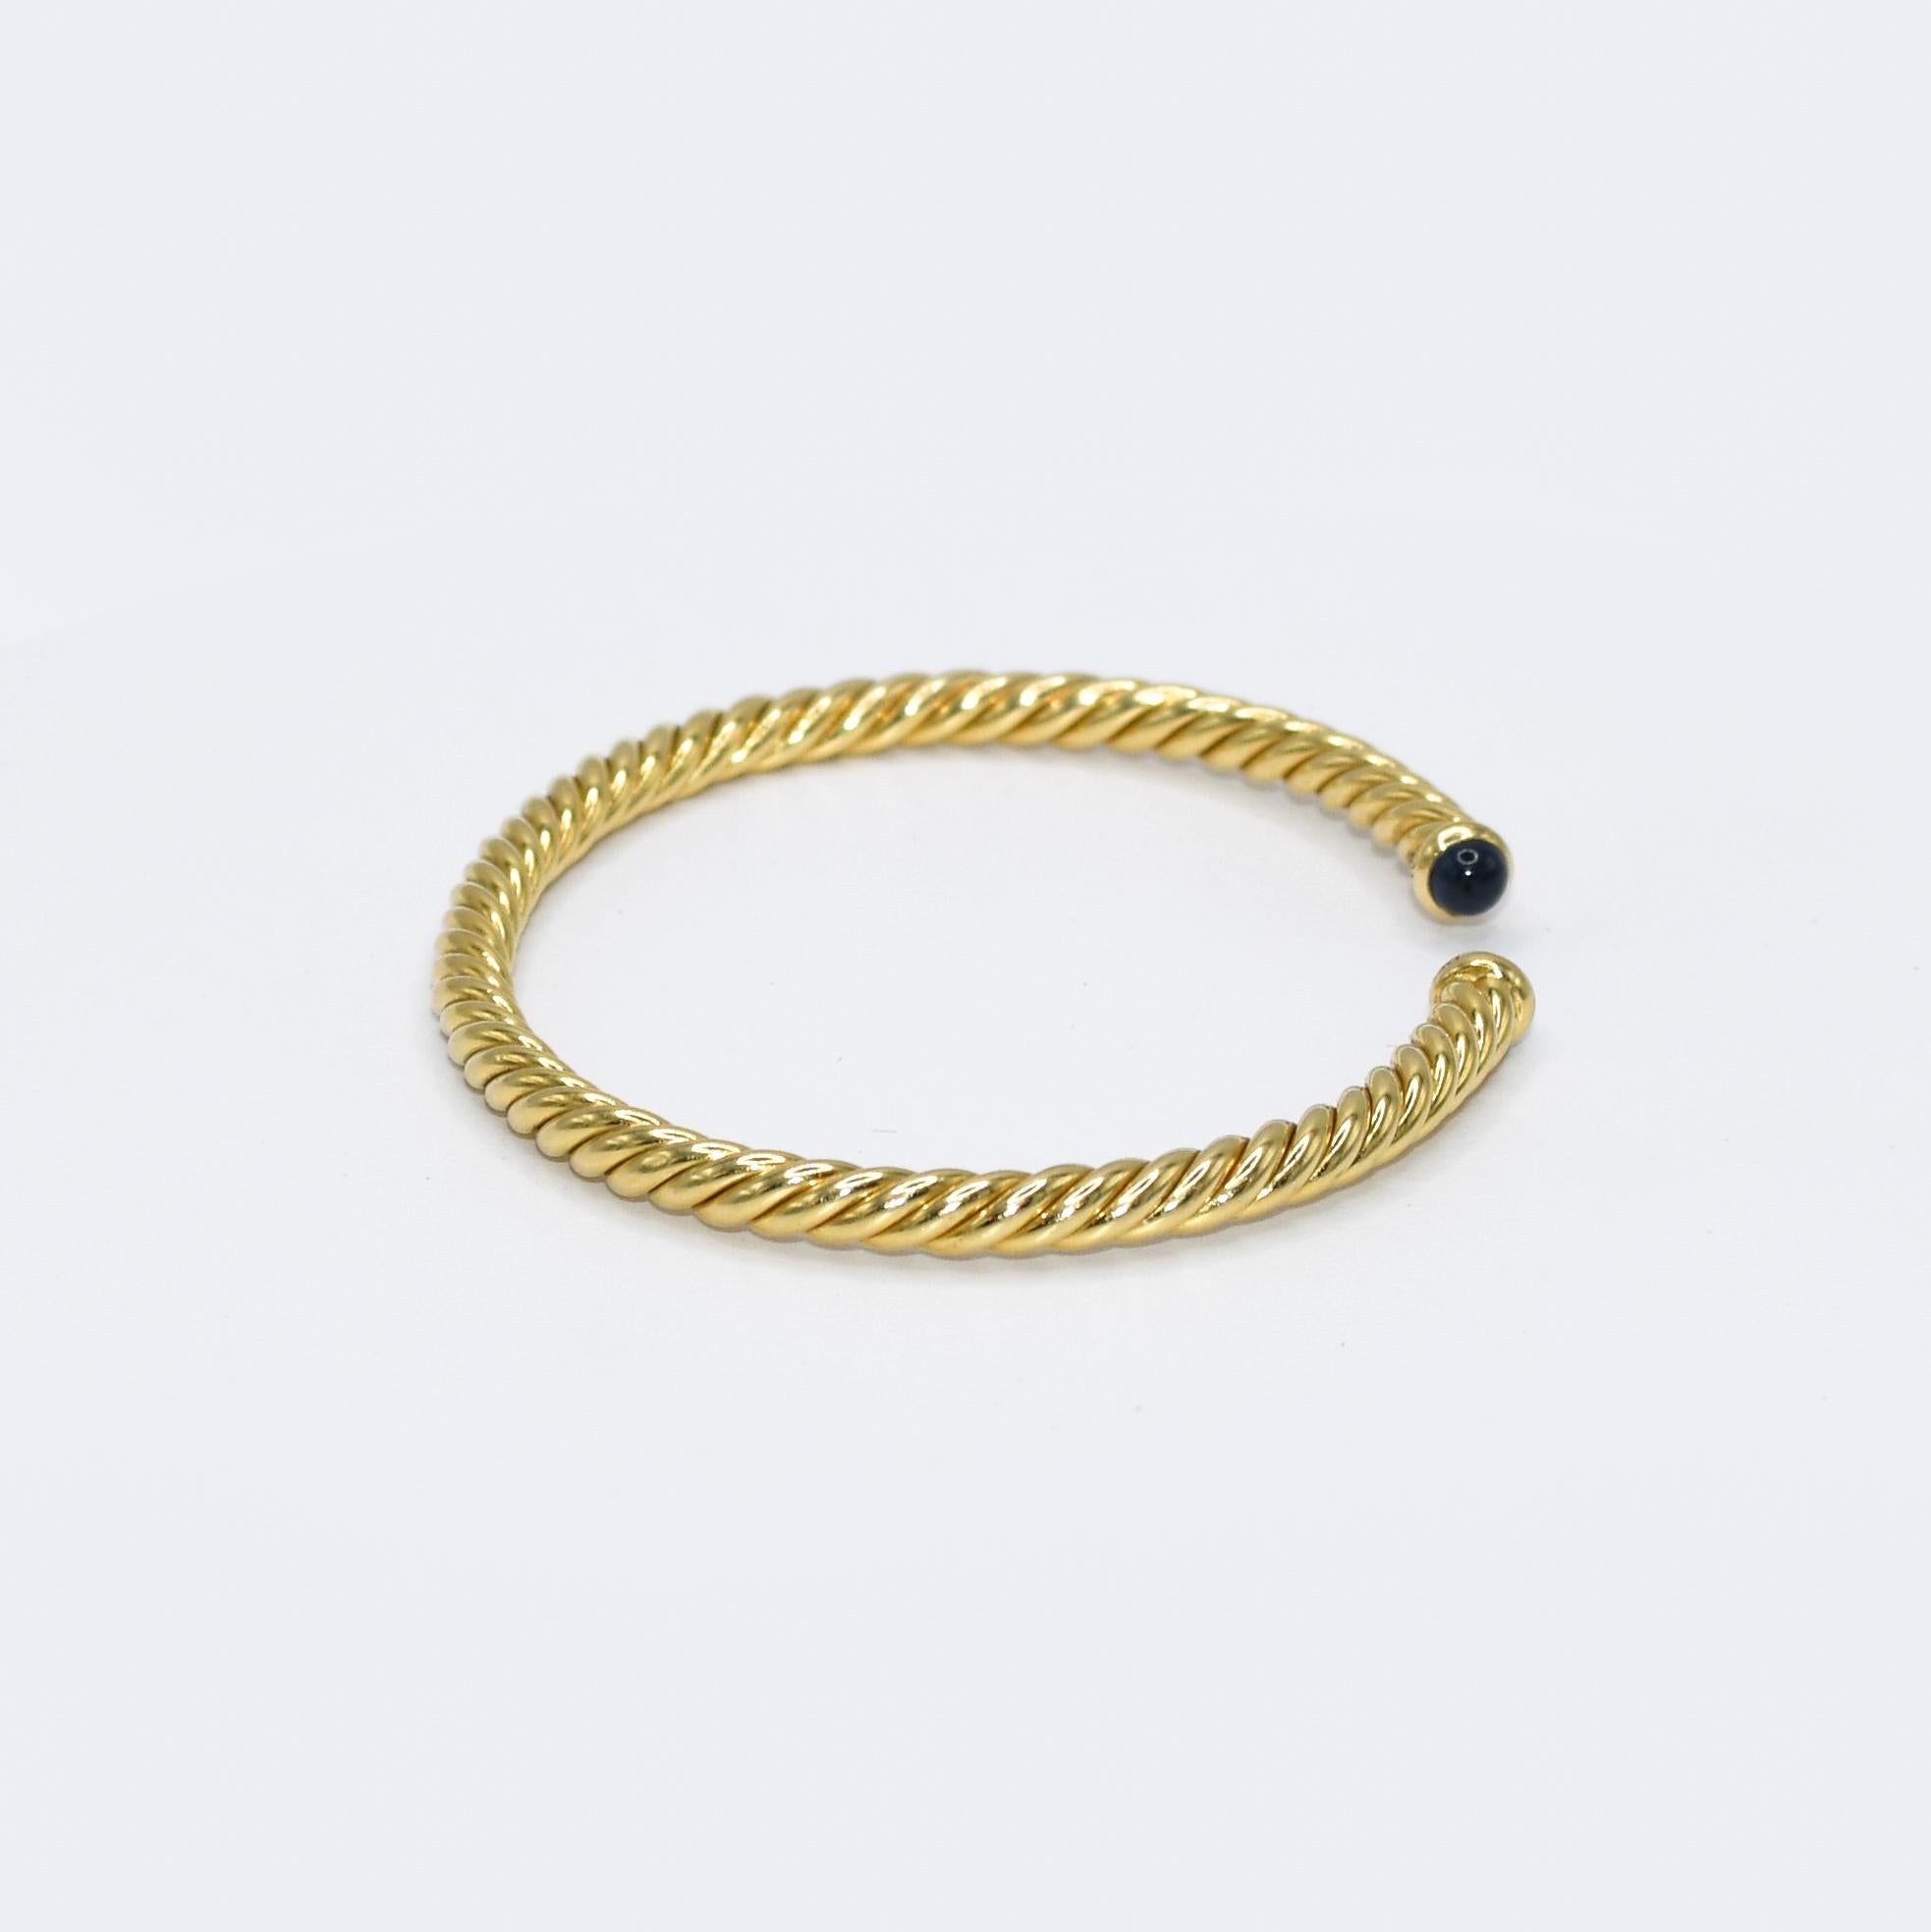 Brilliant Cut 18K Yellow Gold David Yurman Spira Cable Bracelet & Sapphire, 8.5g